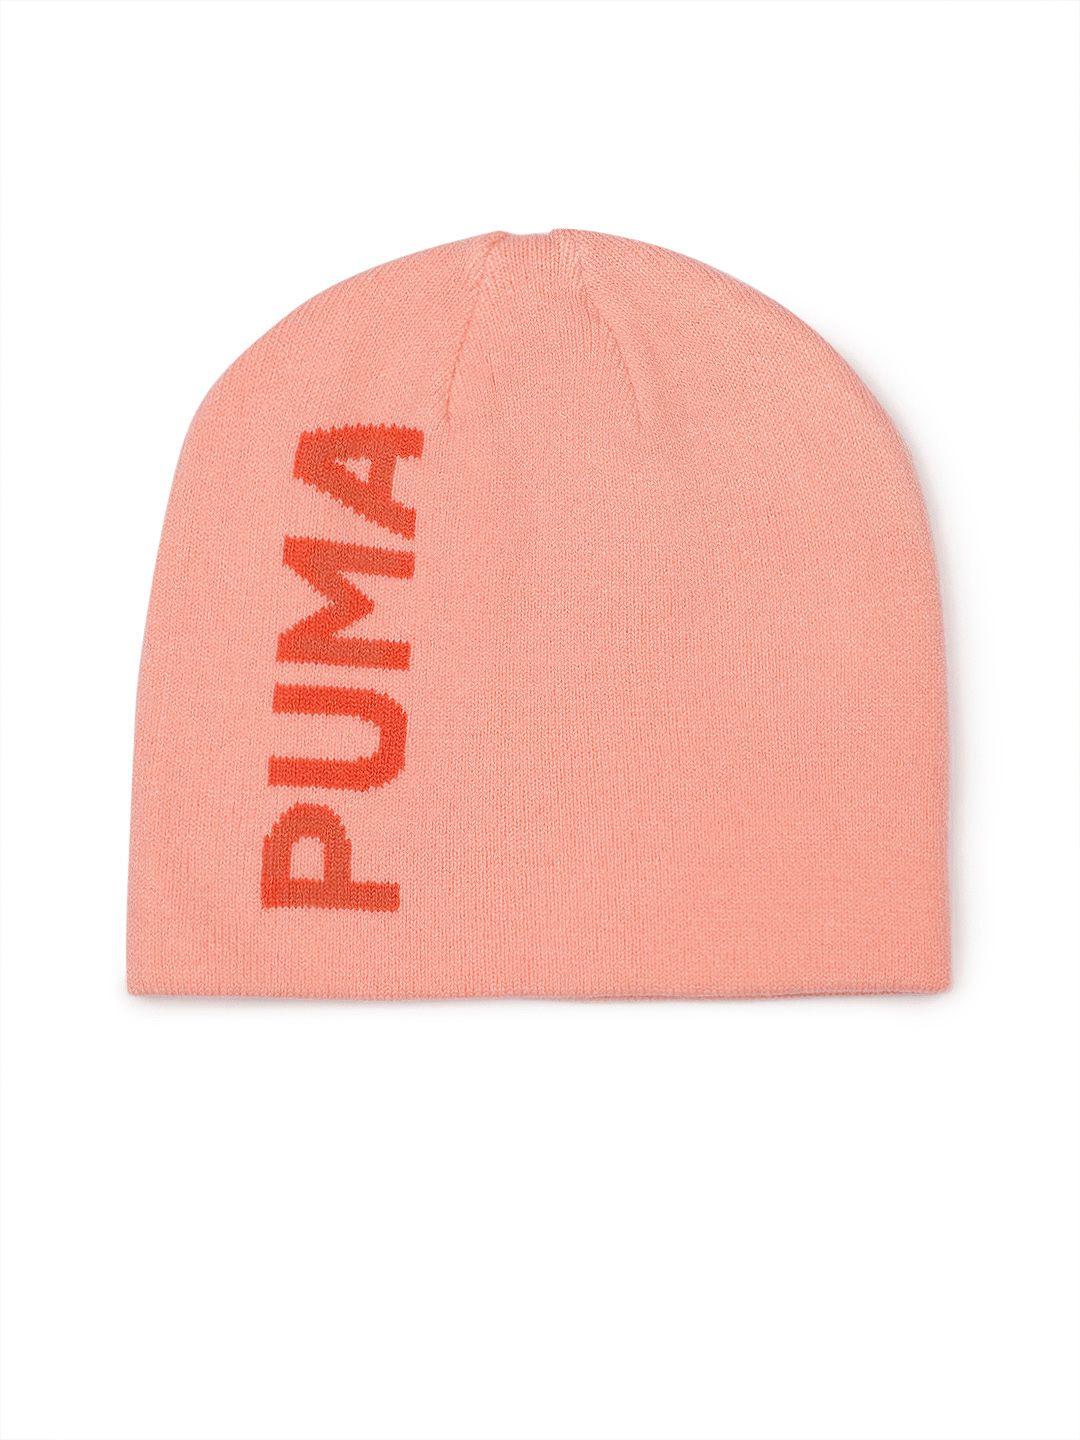 puma unisex brand logo print essential classic cuffless knitted beanie